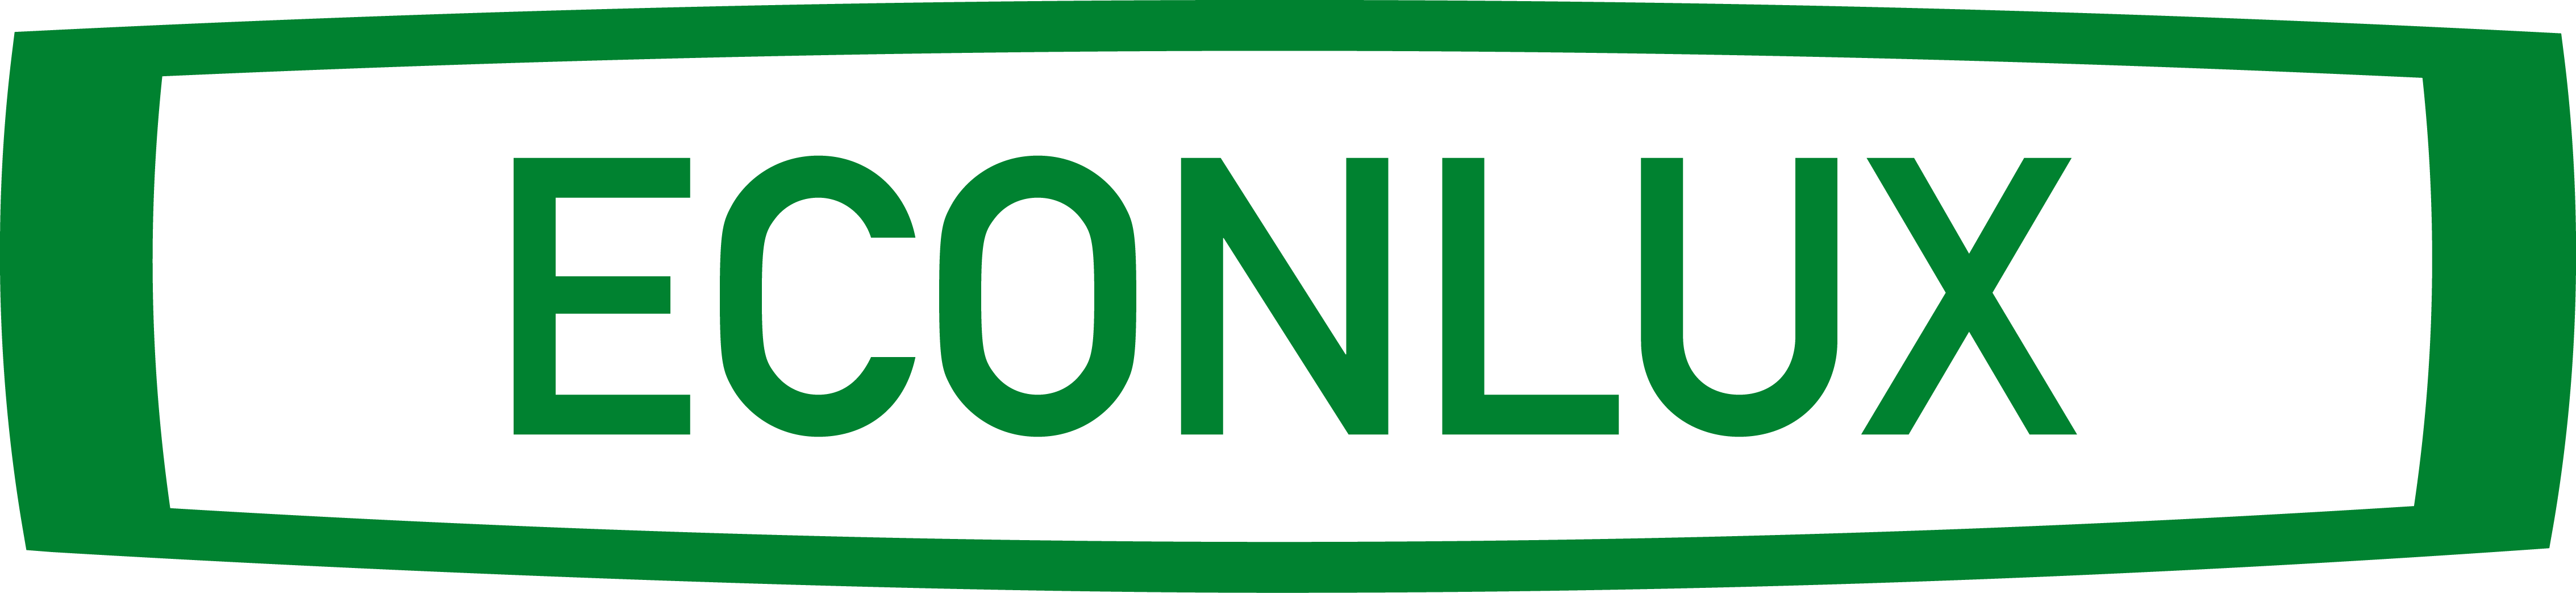 Econlux Logo grün